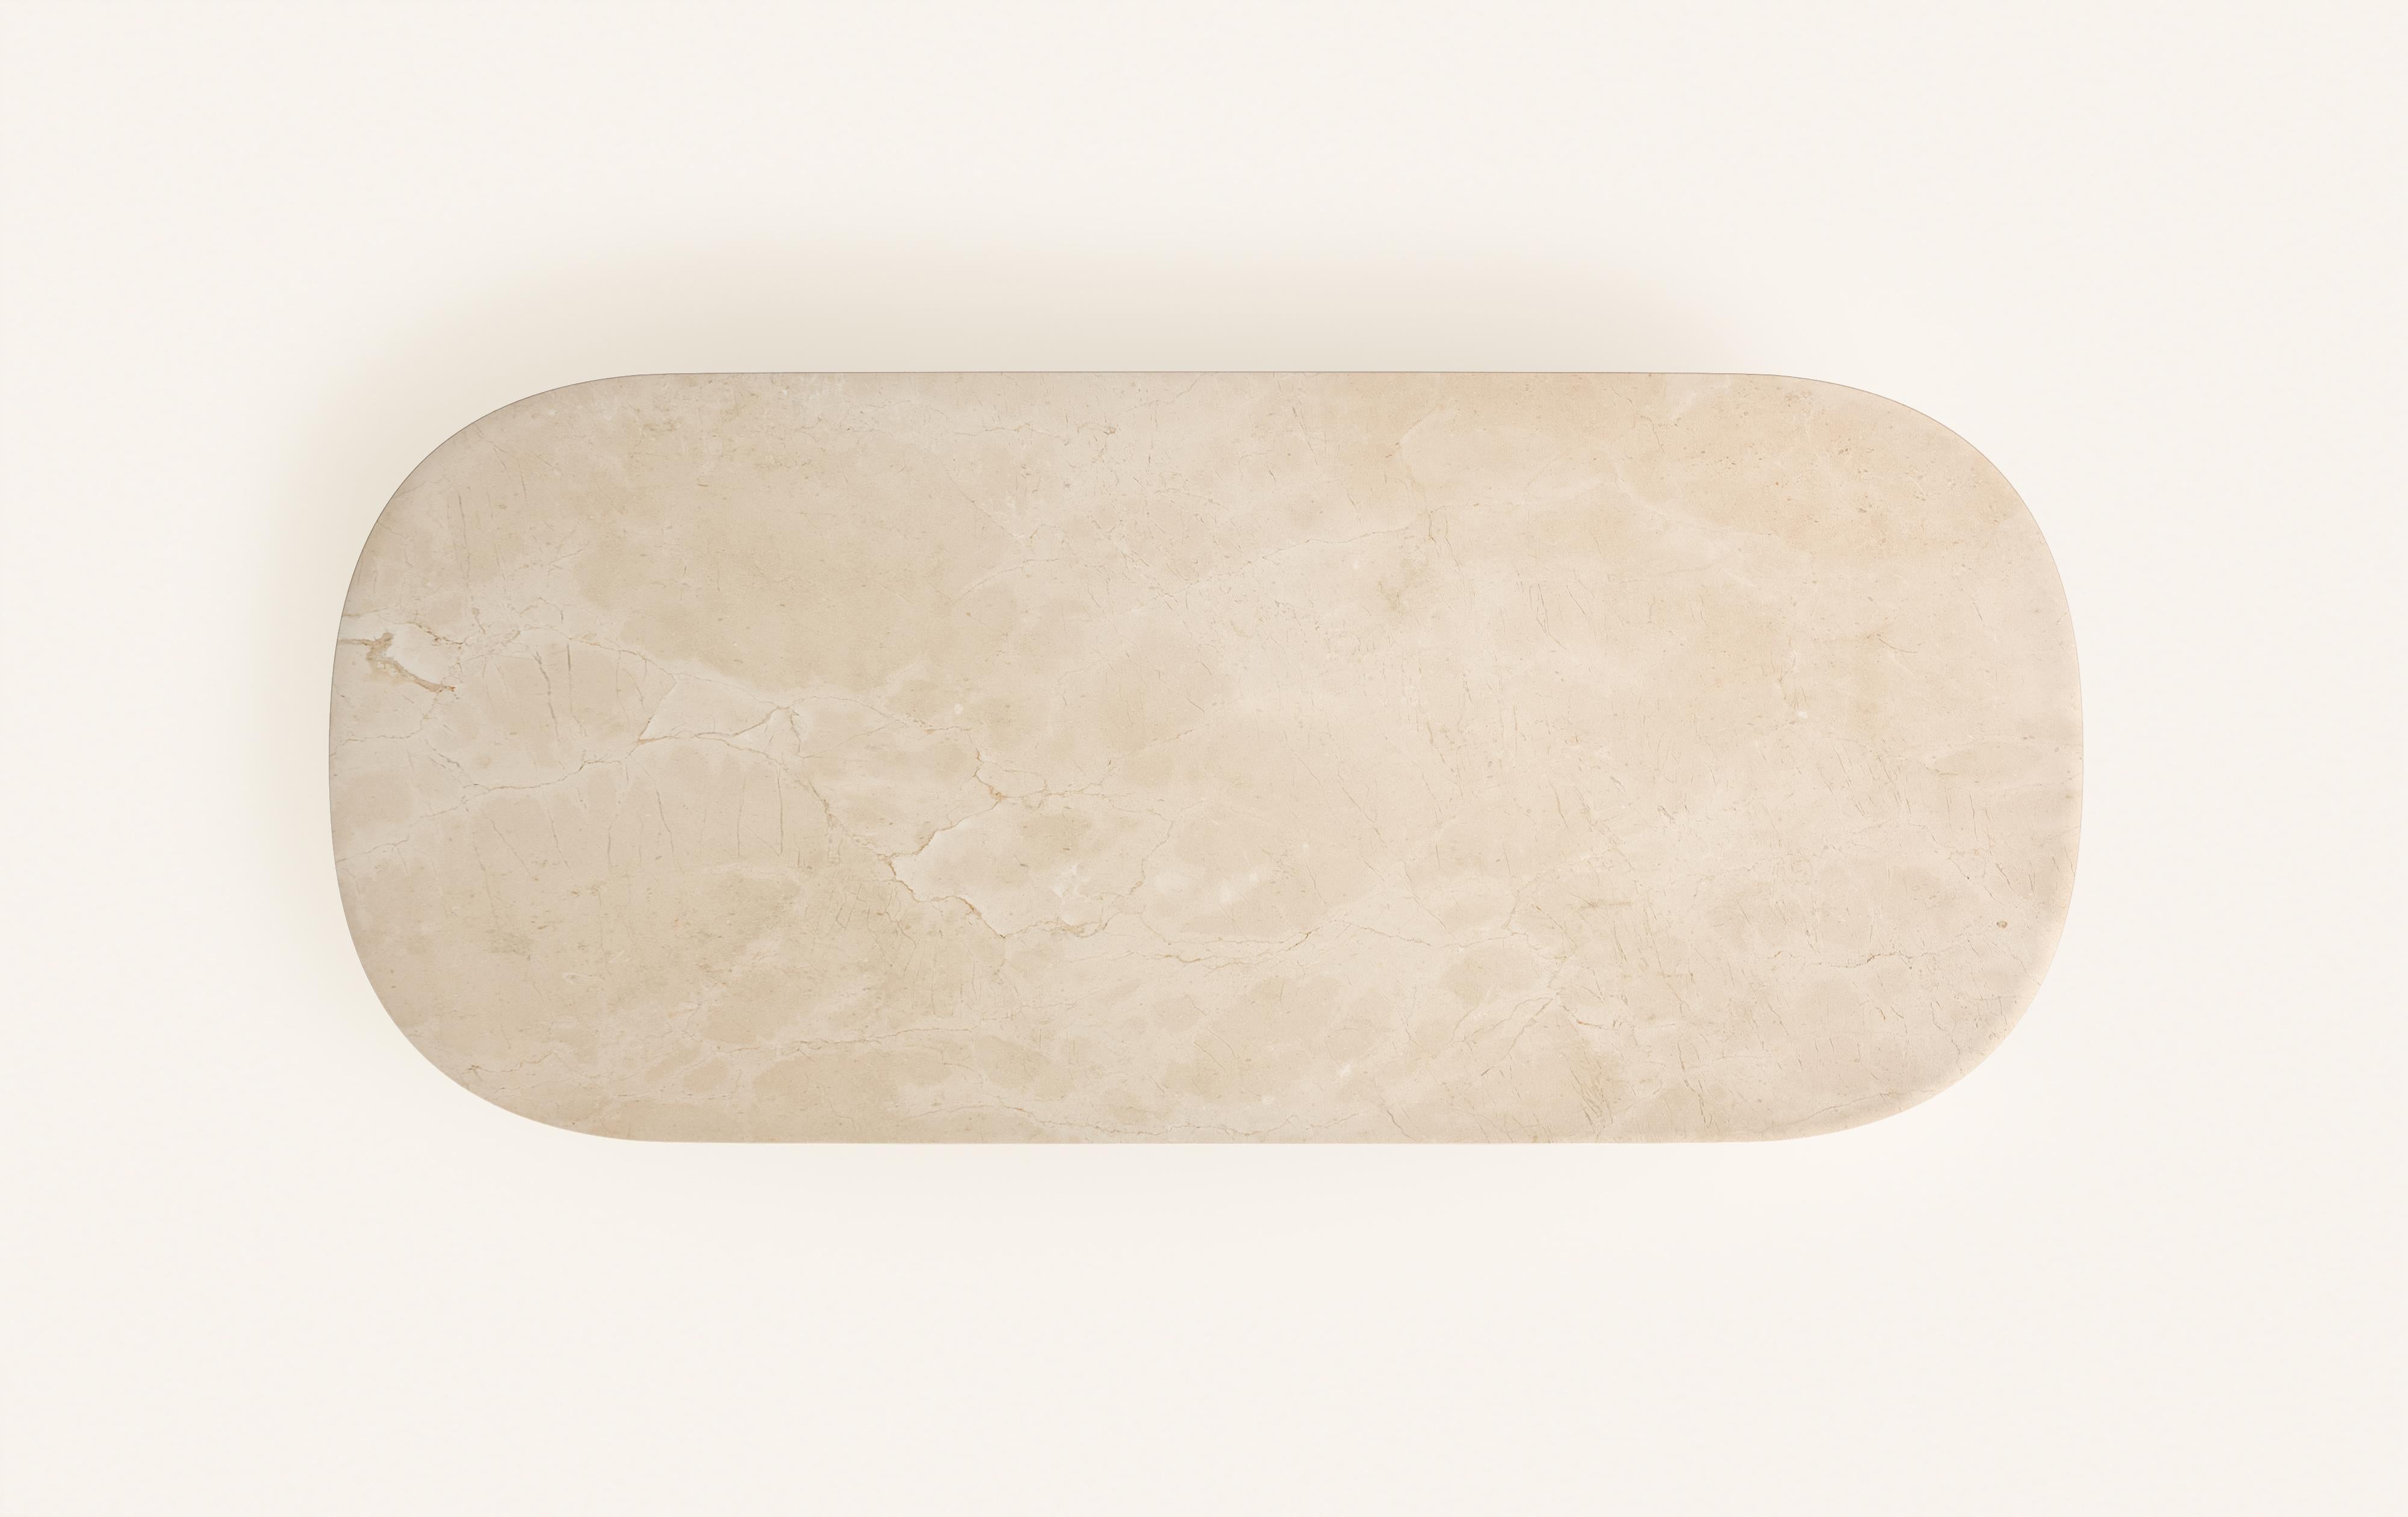 FORM(LA) Cono Oval Dining Table 118”L x 48”W x 30”H Crema Marfil Marble In New Condition For Sale In Los Angeles, CA